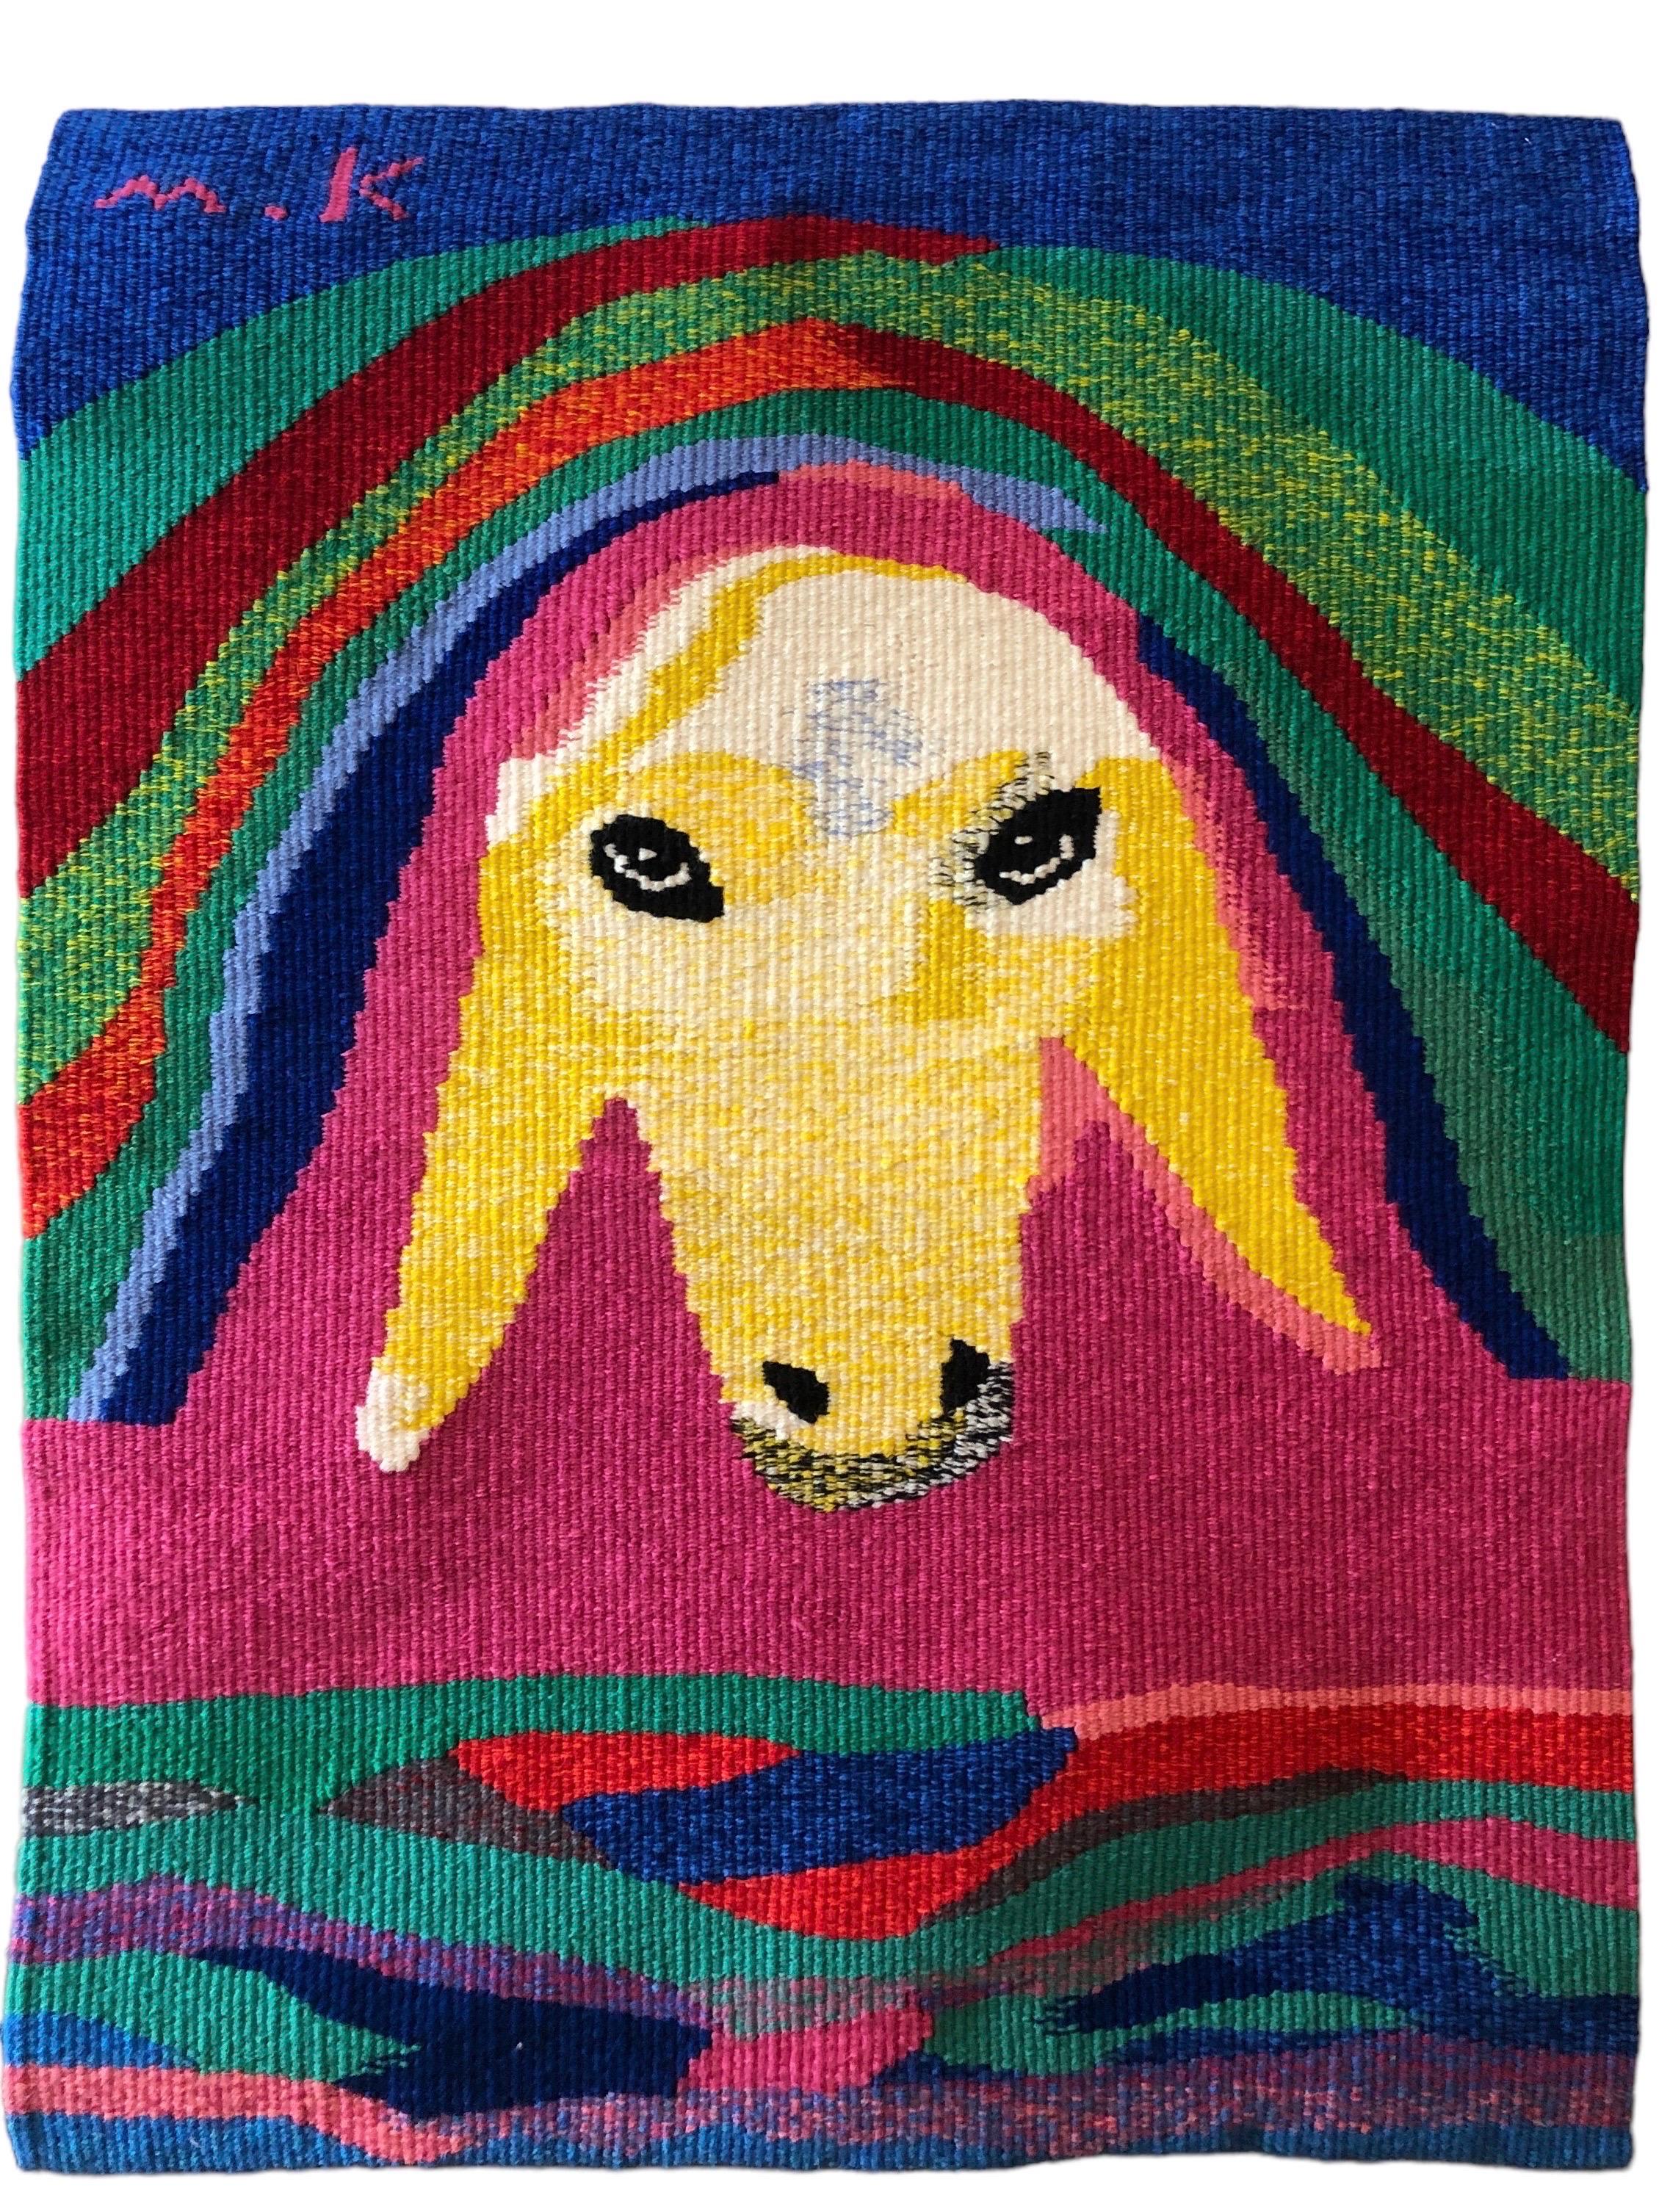  Israeli Hand Woven Colorful Wool Tapestry Weaving Menashe Kadishman Sheep Head  For Sale 6